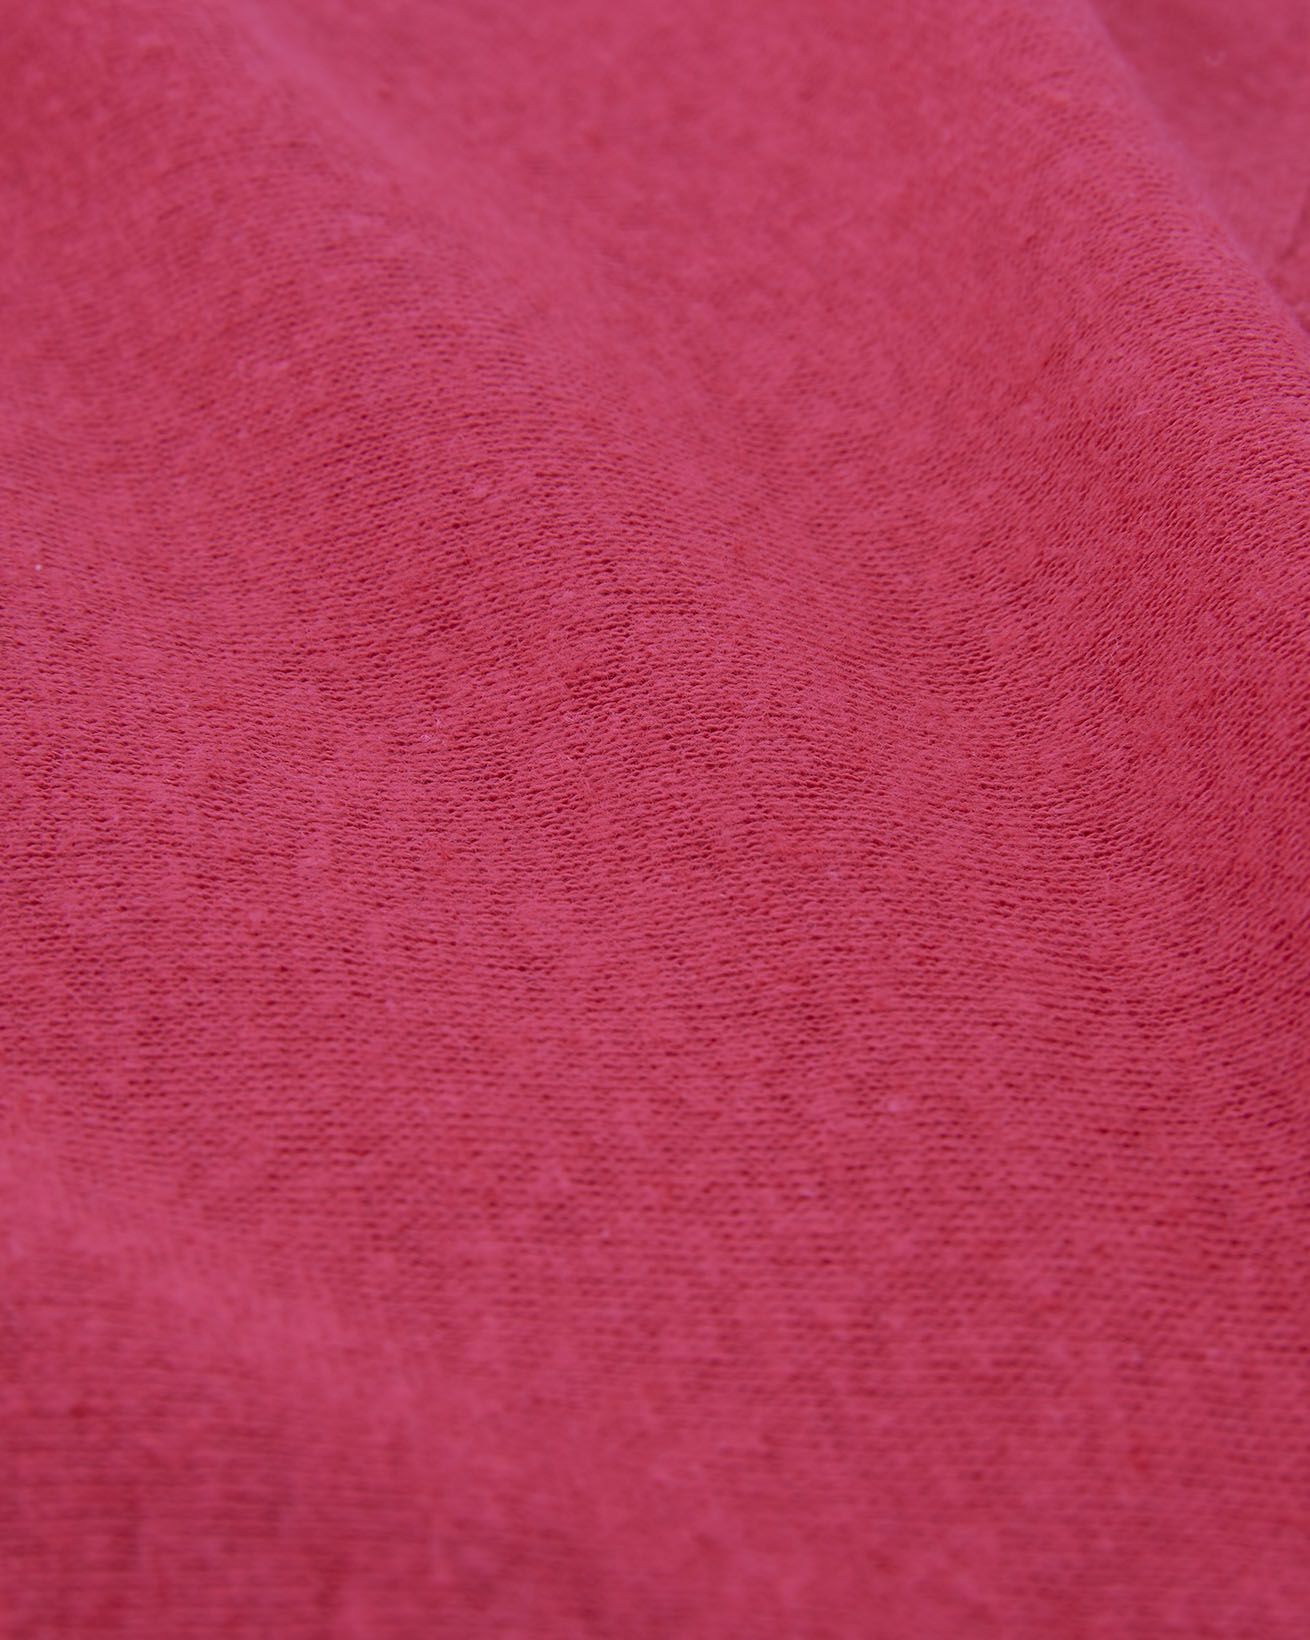 8421_linen-cotton-v-neck-t-shirt_raspberry_detail-2_web.jpg